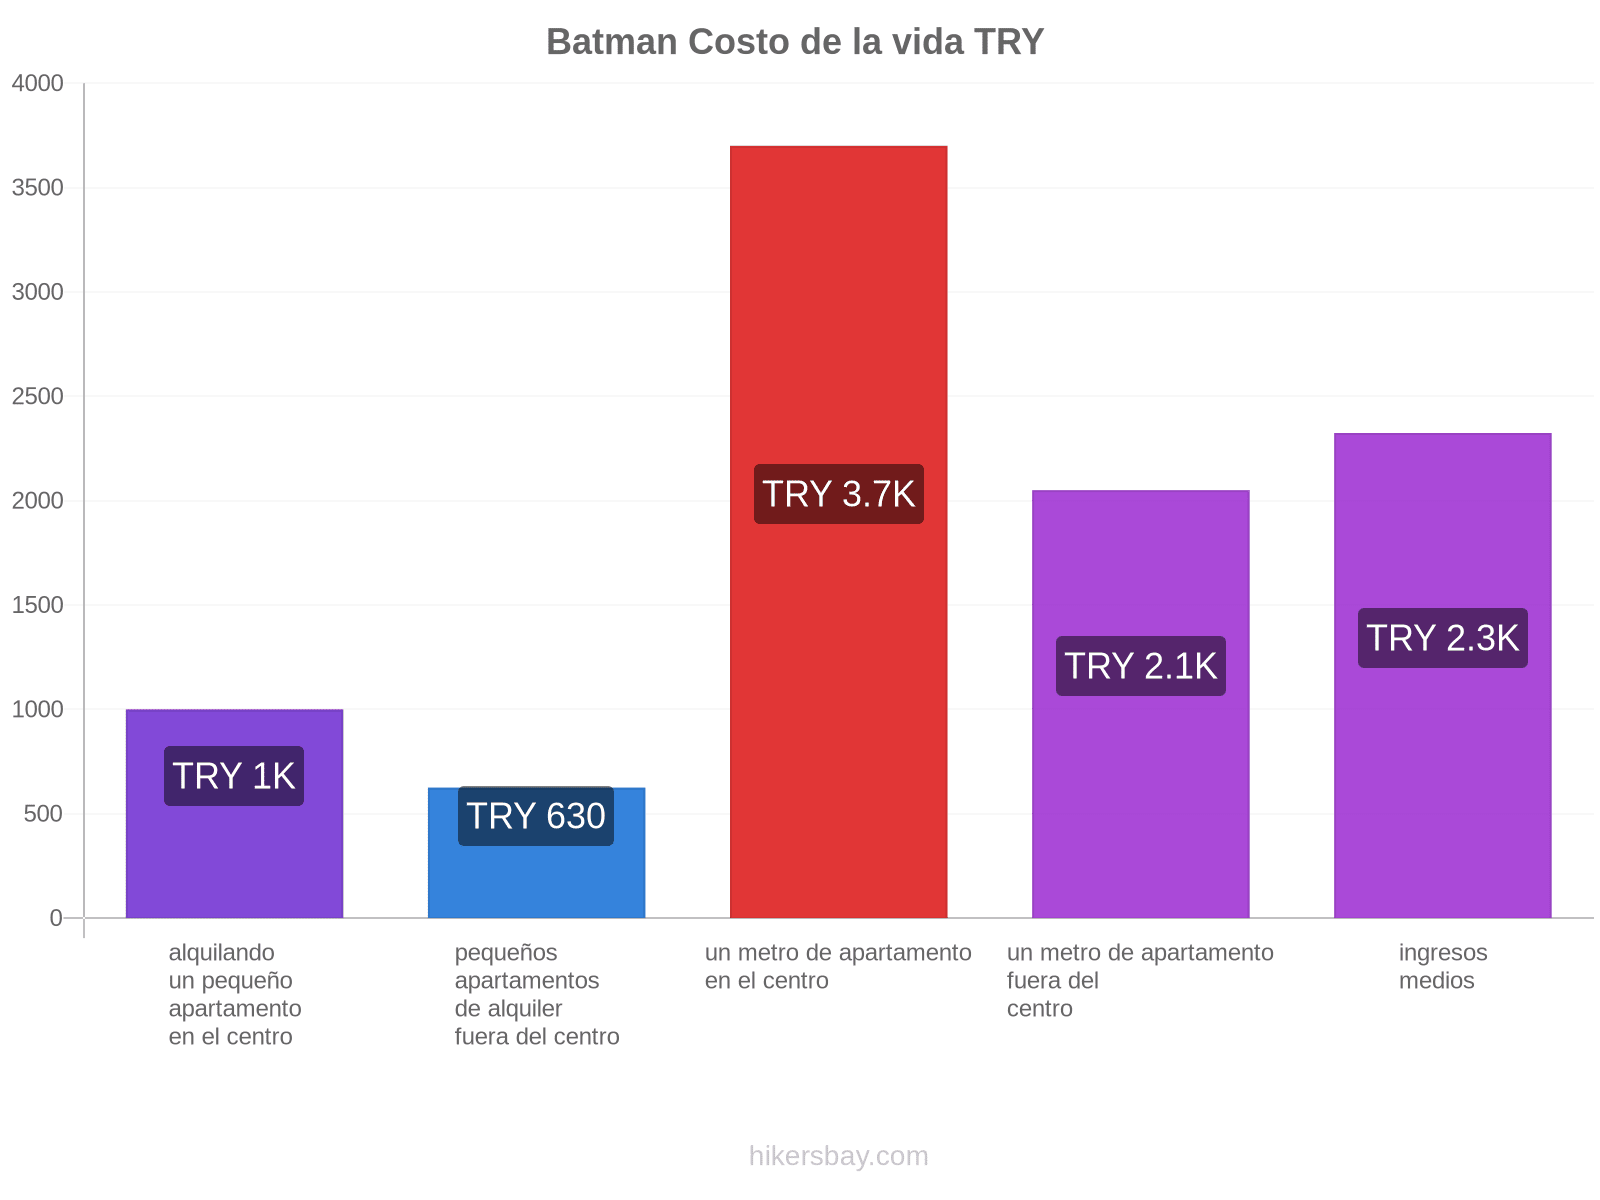 Batman costo de la vida hikersbay.com